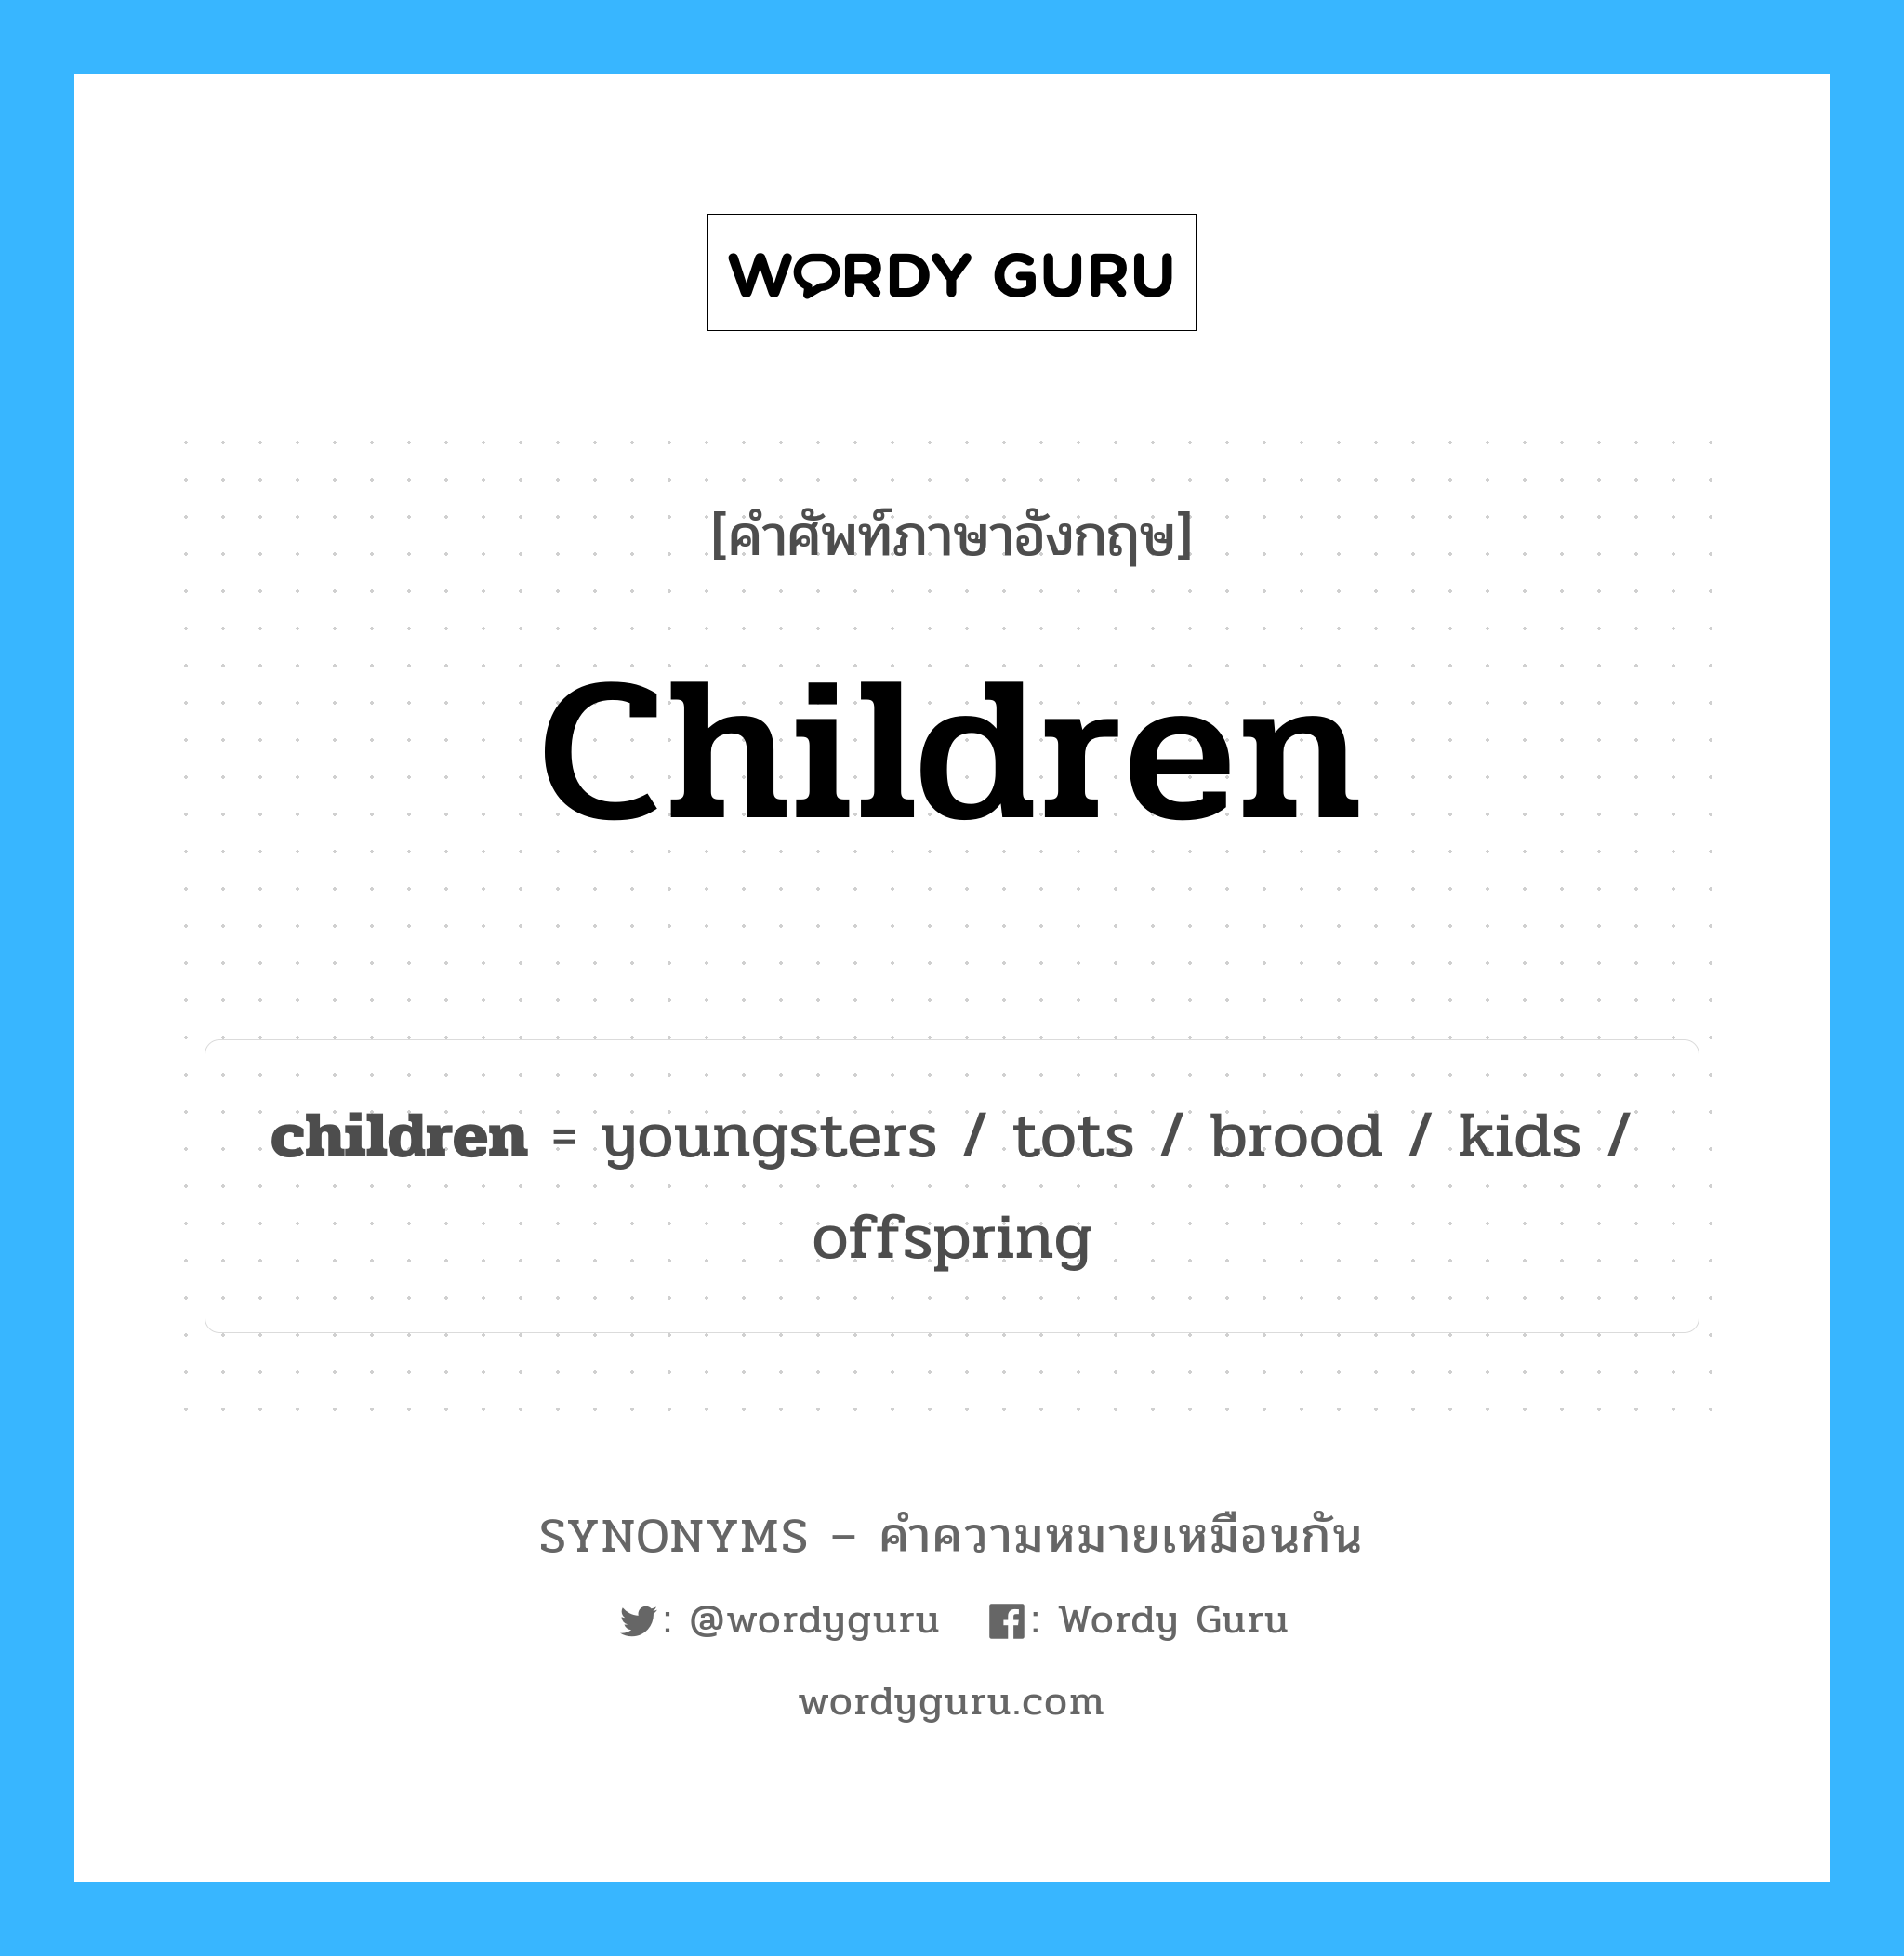 children เป็นหนึ่งใน kids และมีคำอื่น ๆ อีกดังนี้, คำศัพท์ภาษาอังกฤษ children ความหมายคล้ายกันกับ kids แปลว่า เด็ก หมวด kids